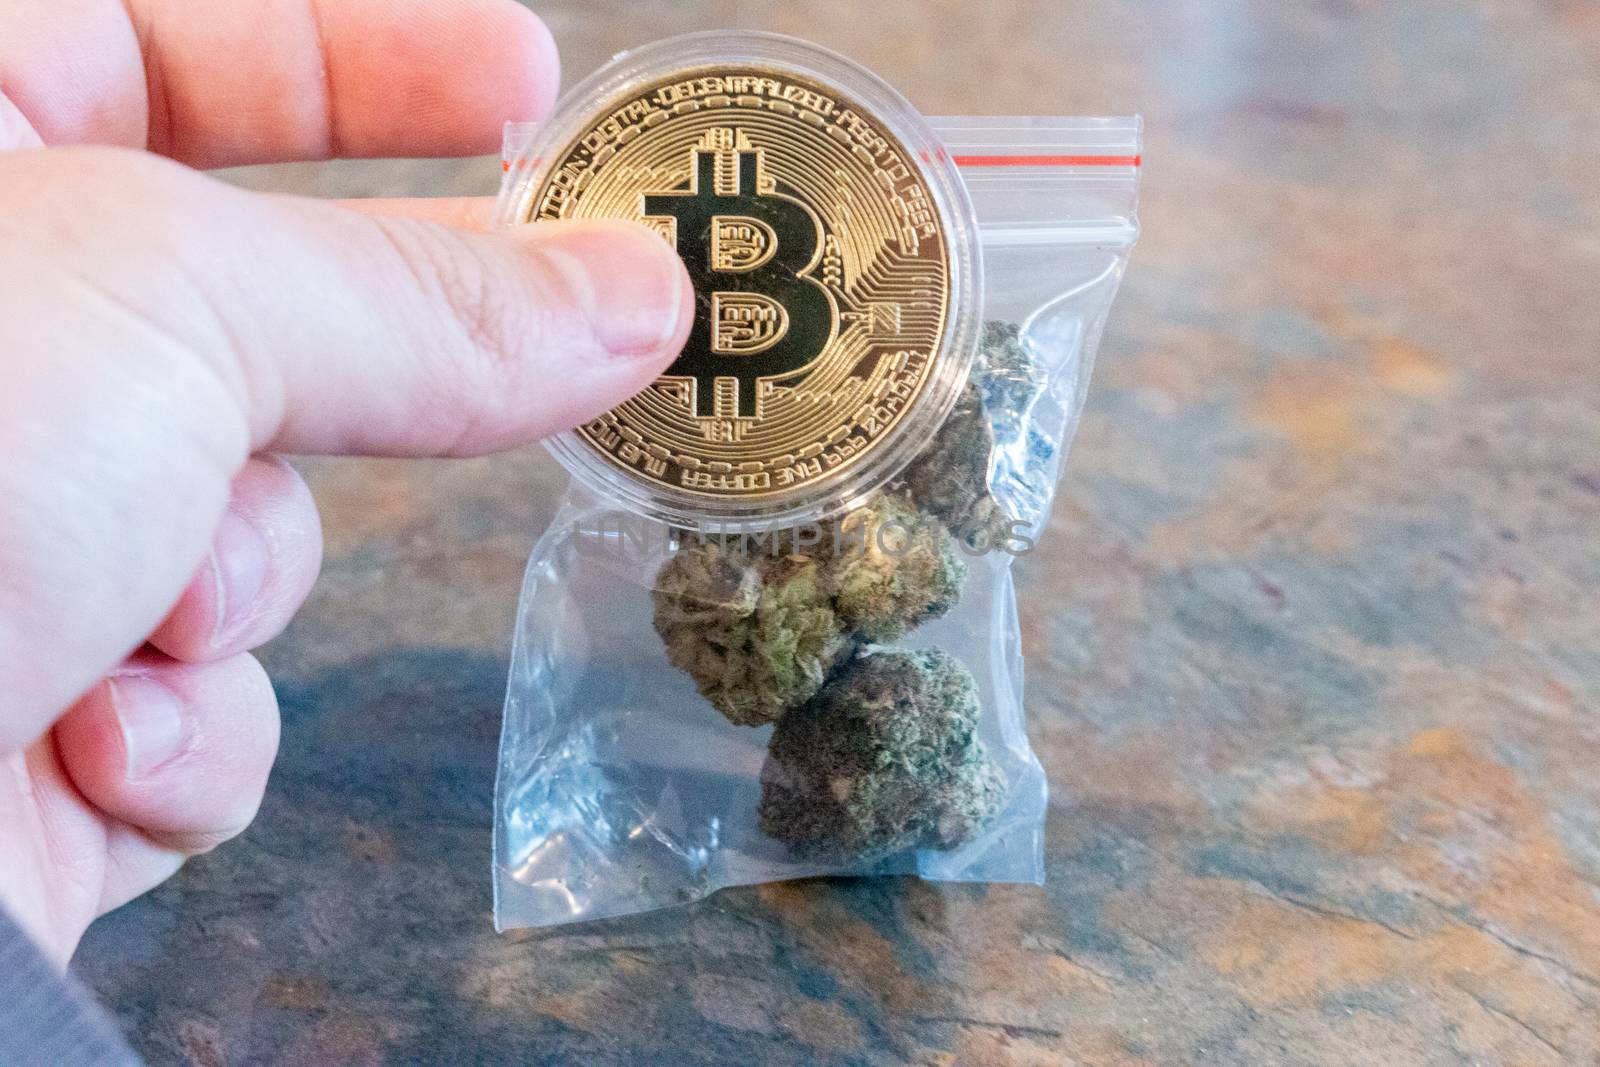 Cannabis Medical Marijuana Buds with Bitcoin Cryptocurrency Coins..